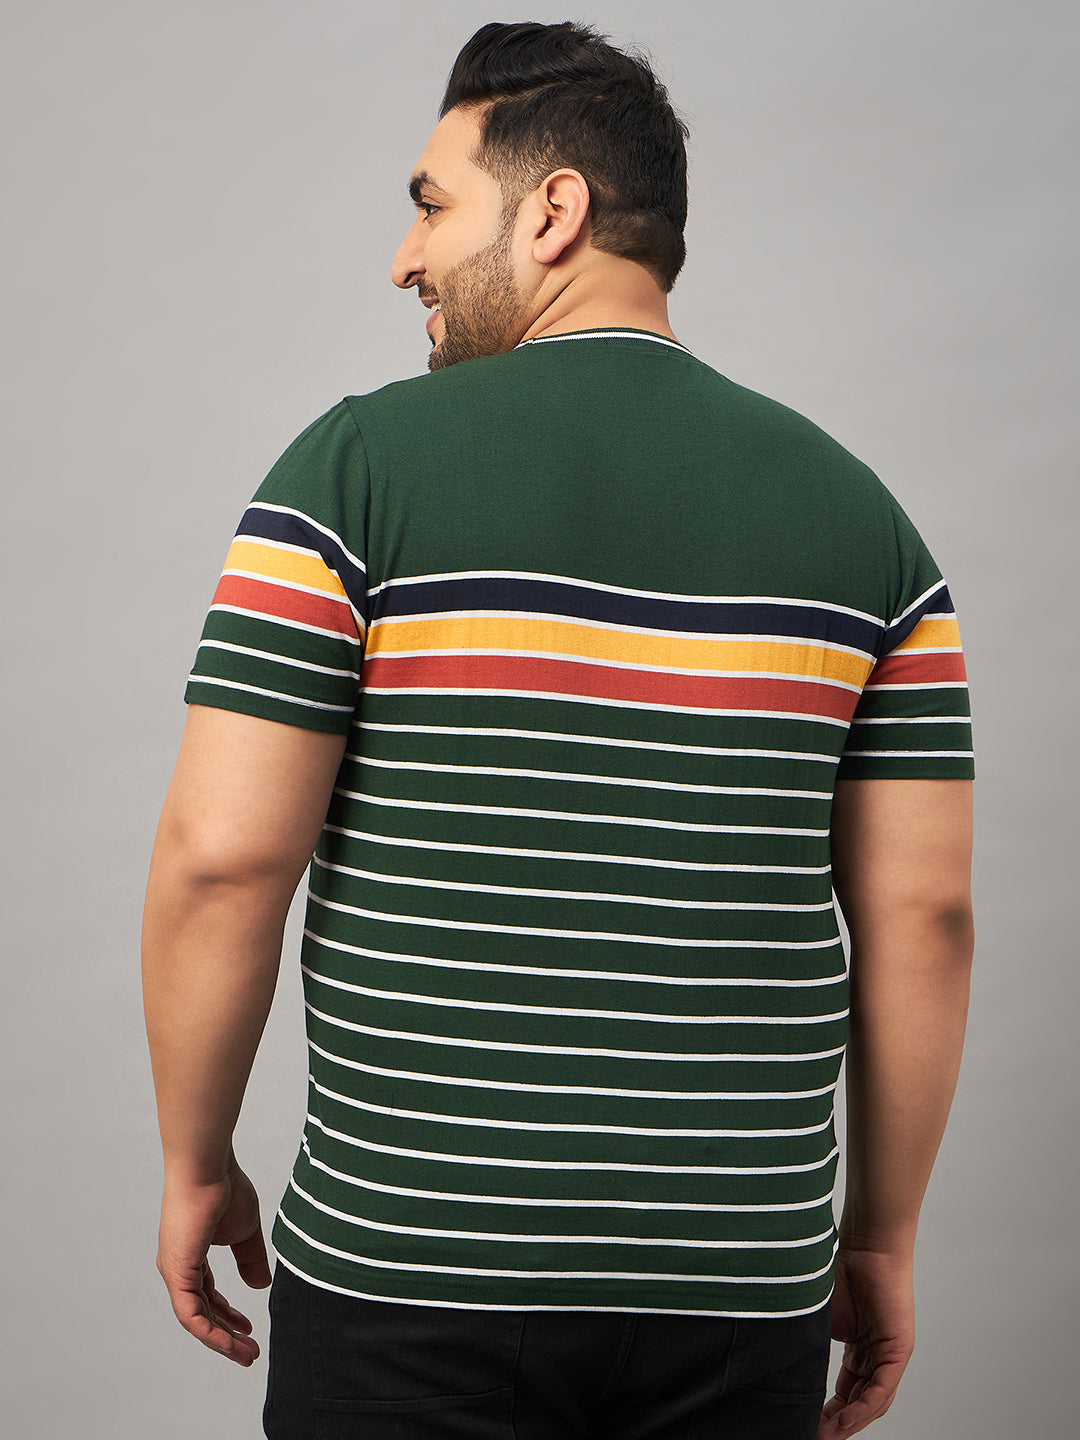 Austivo Striped Men Round Neck Multicolor T-Shirt